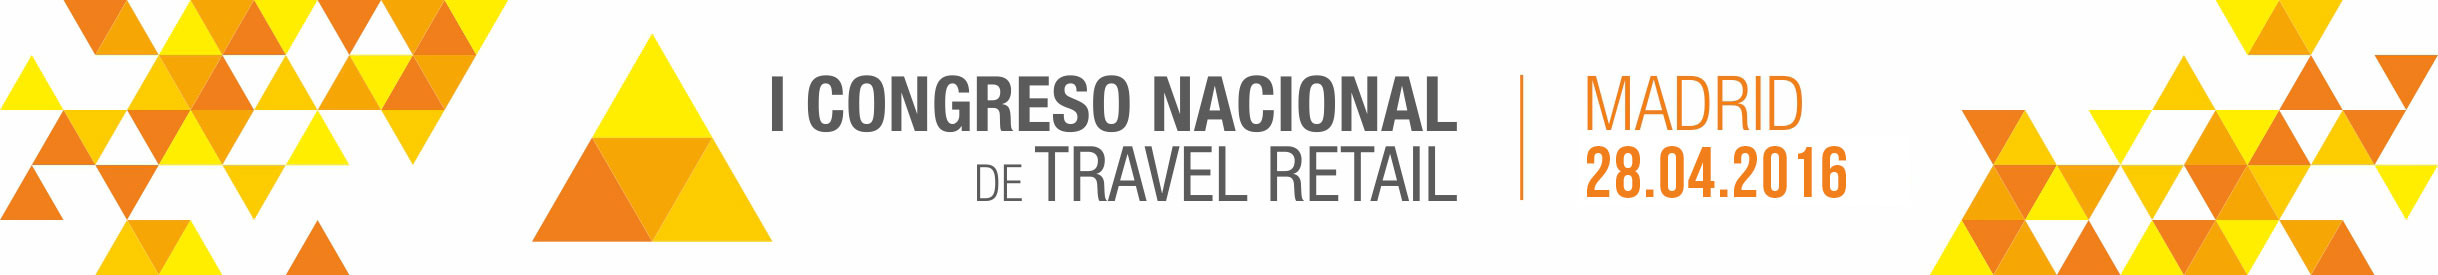 banner_congreso_travel_retail_spain